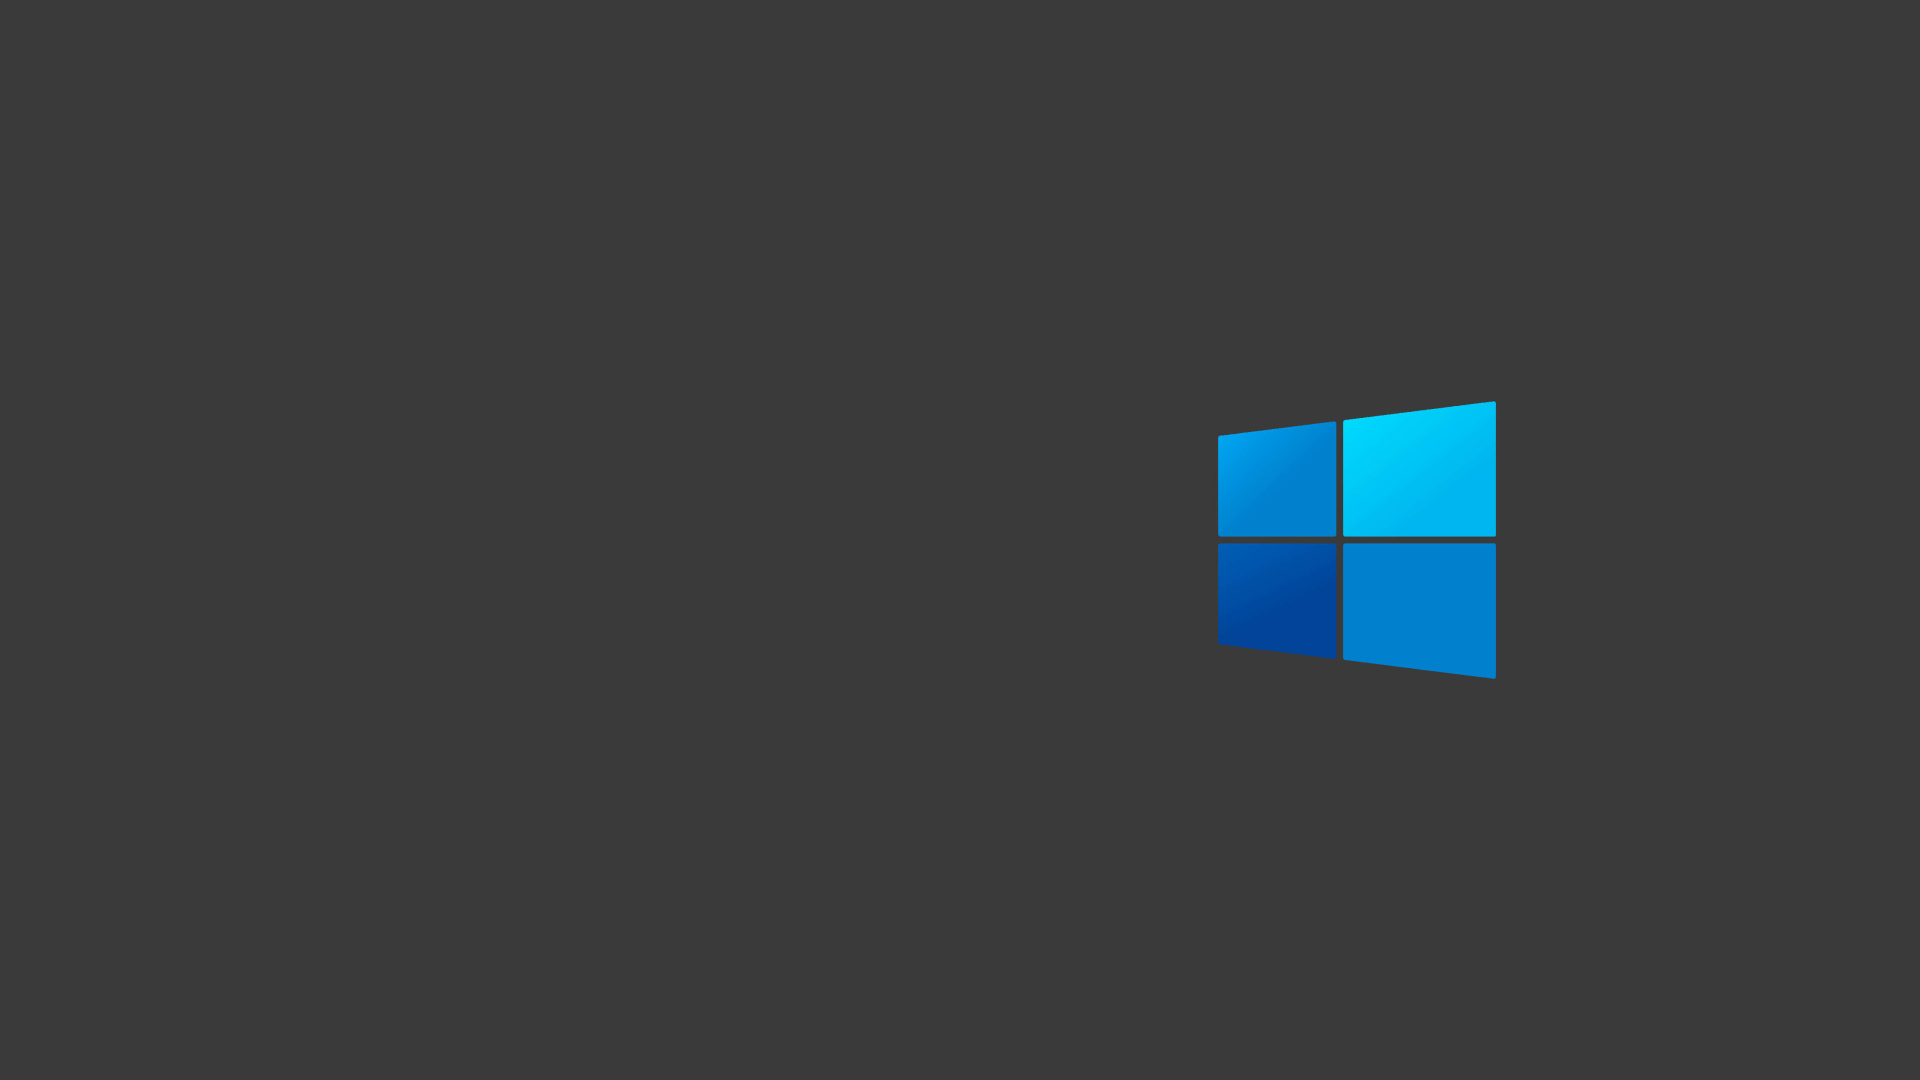 1920x1080 Windows 10 Dark Logo Minimal 1080P Laptop Full HD Wallpaper, HD  Minimalist 4K Wallpapers, Images, Photos and Background - Wallpapers Den